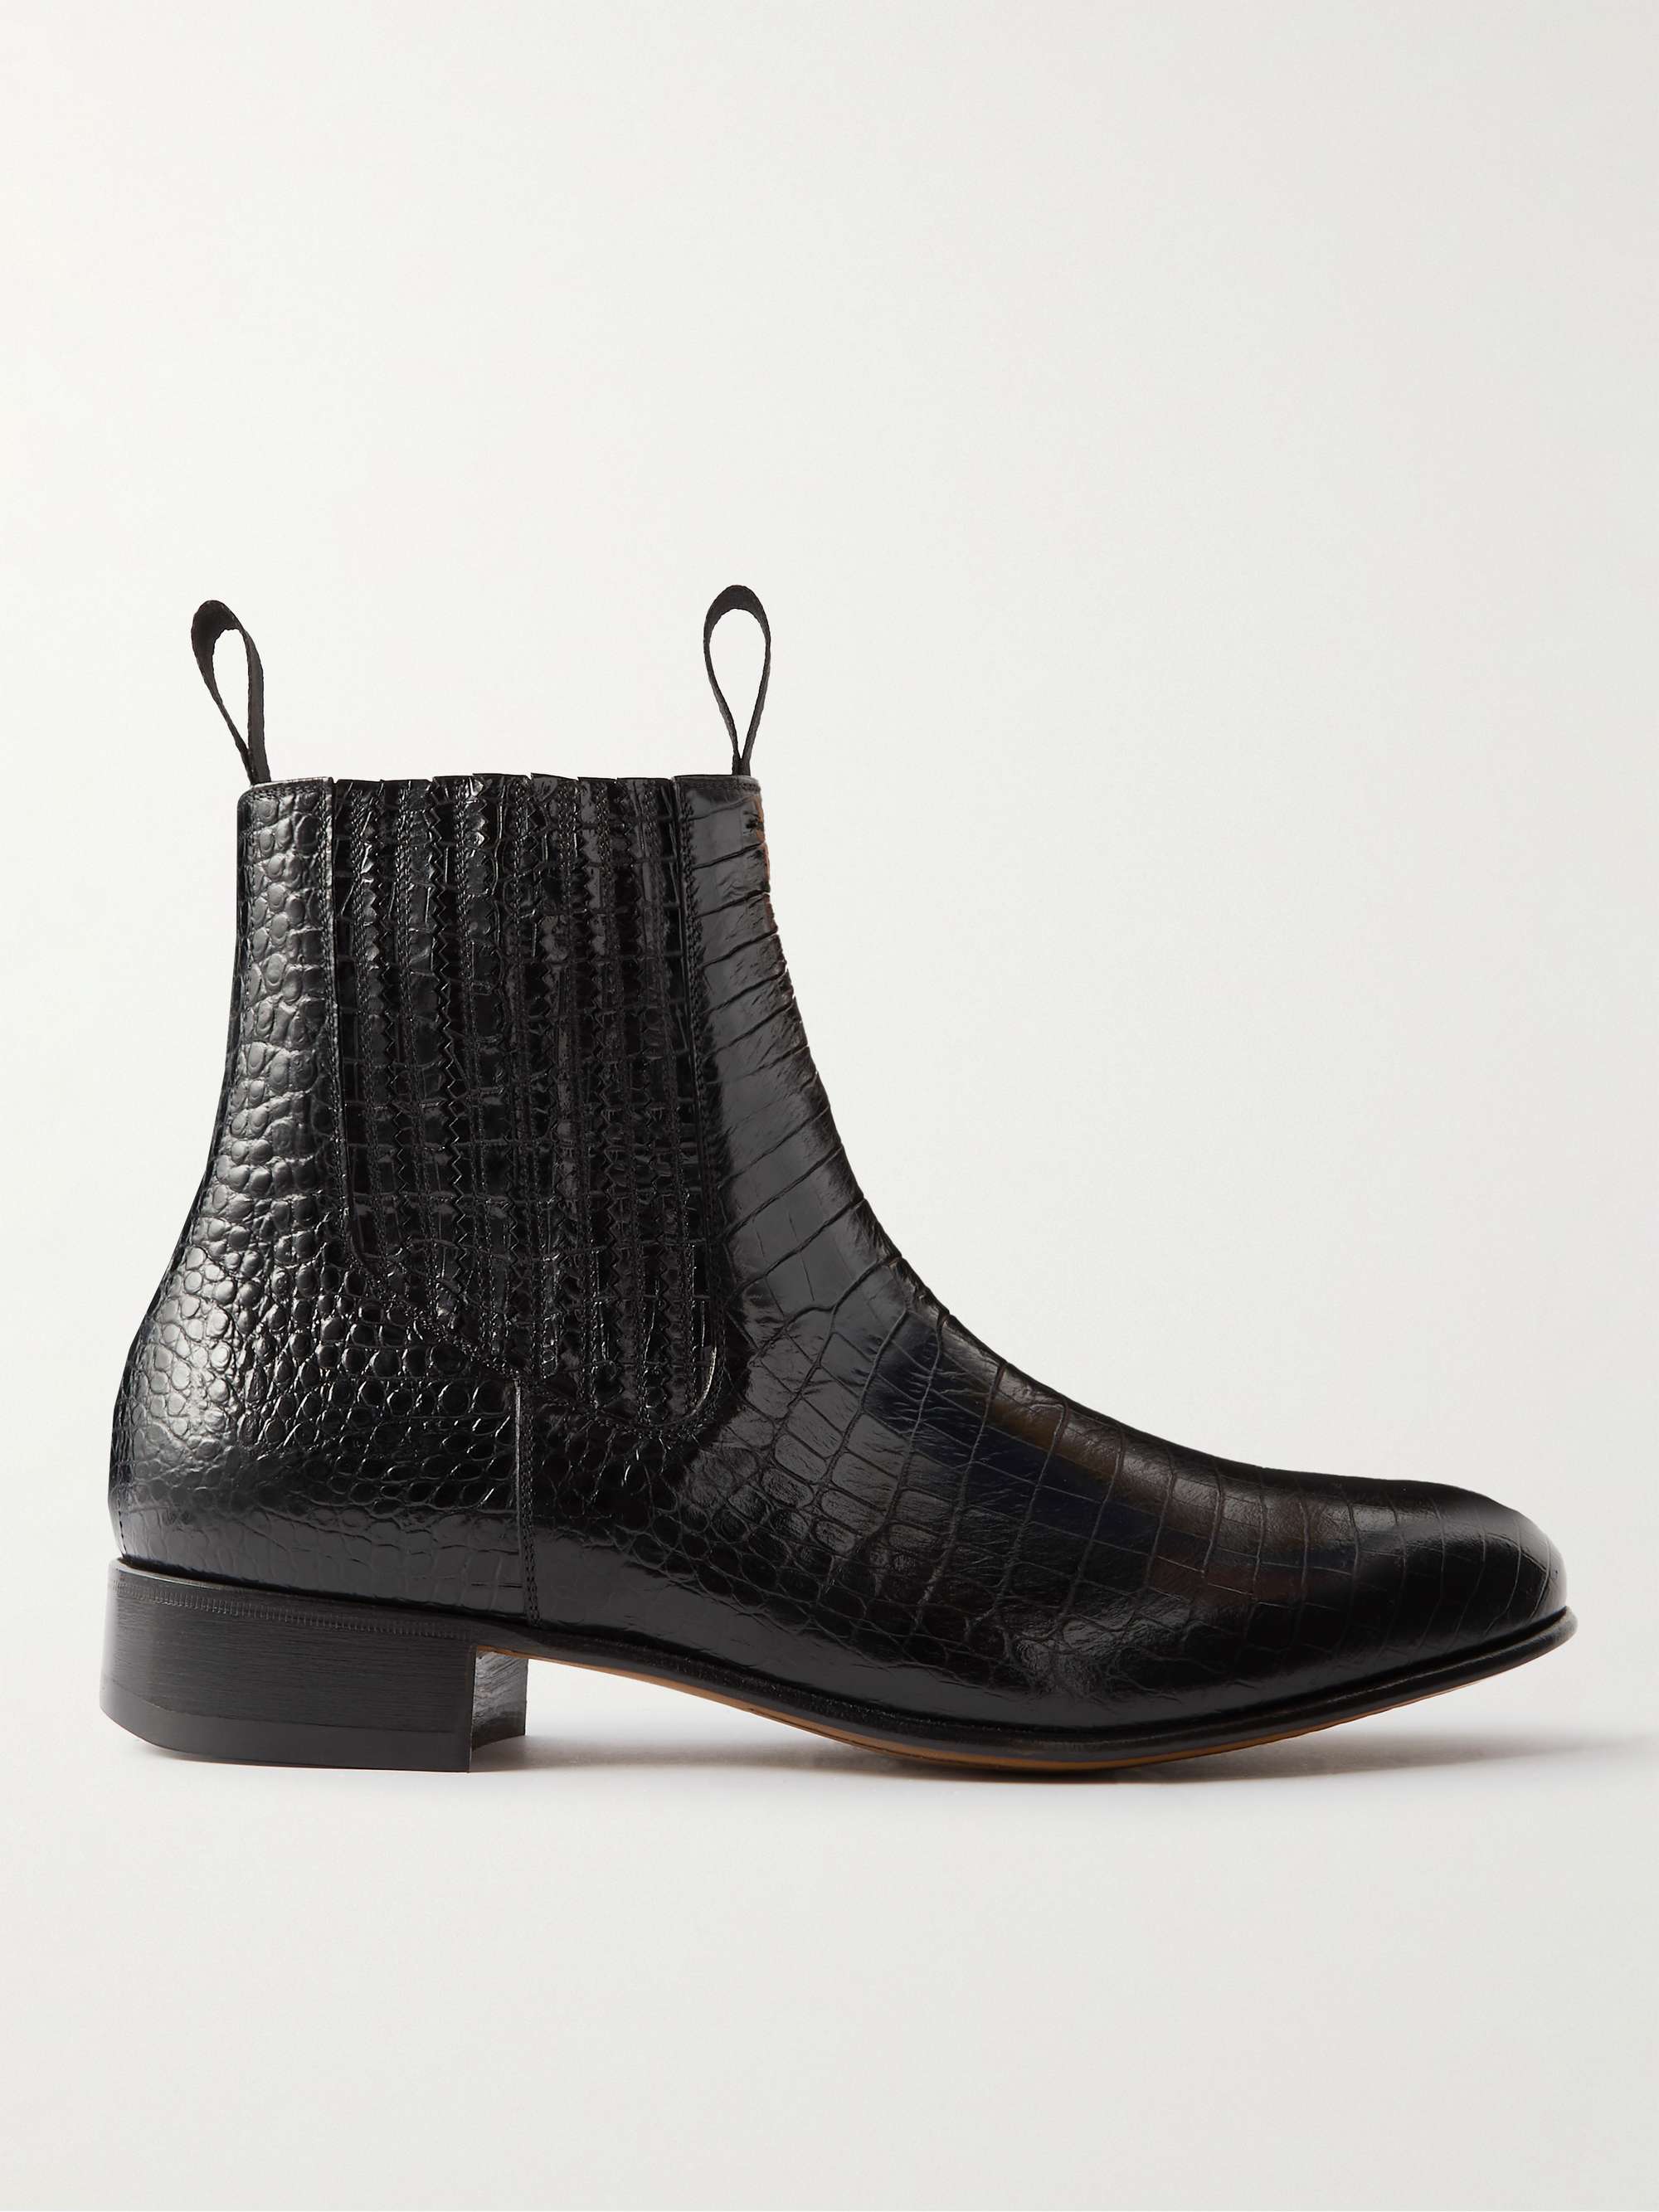 TOM FORD Kurt Croc-Effect Leather Chelsea Boots for Men | MR PORTER